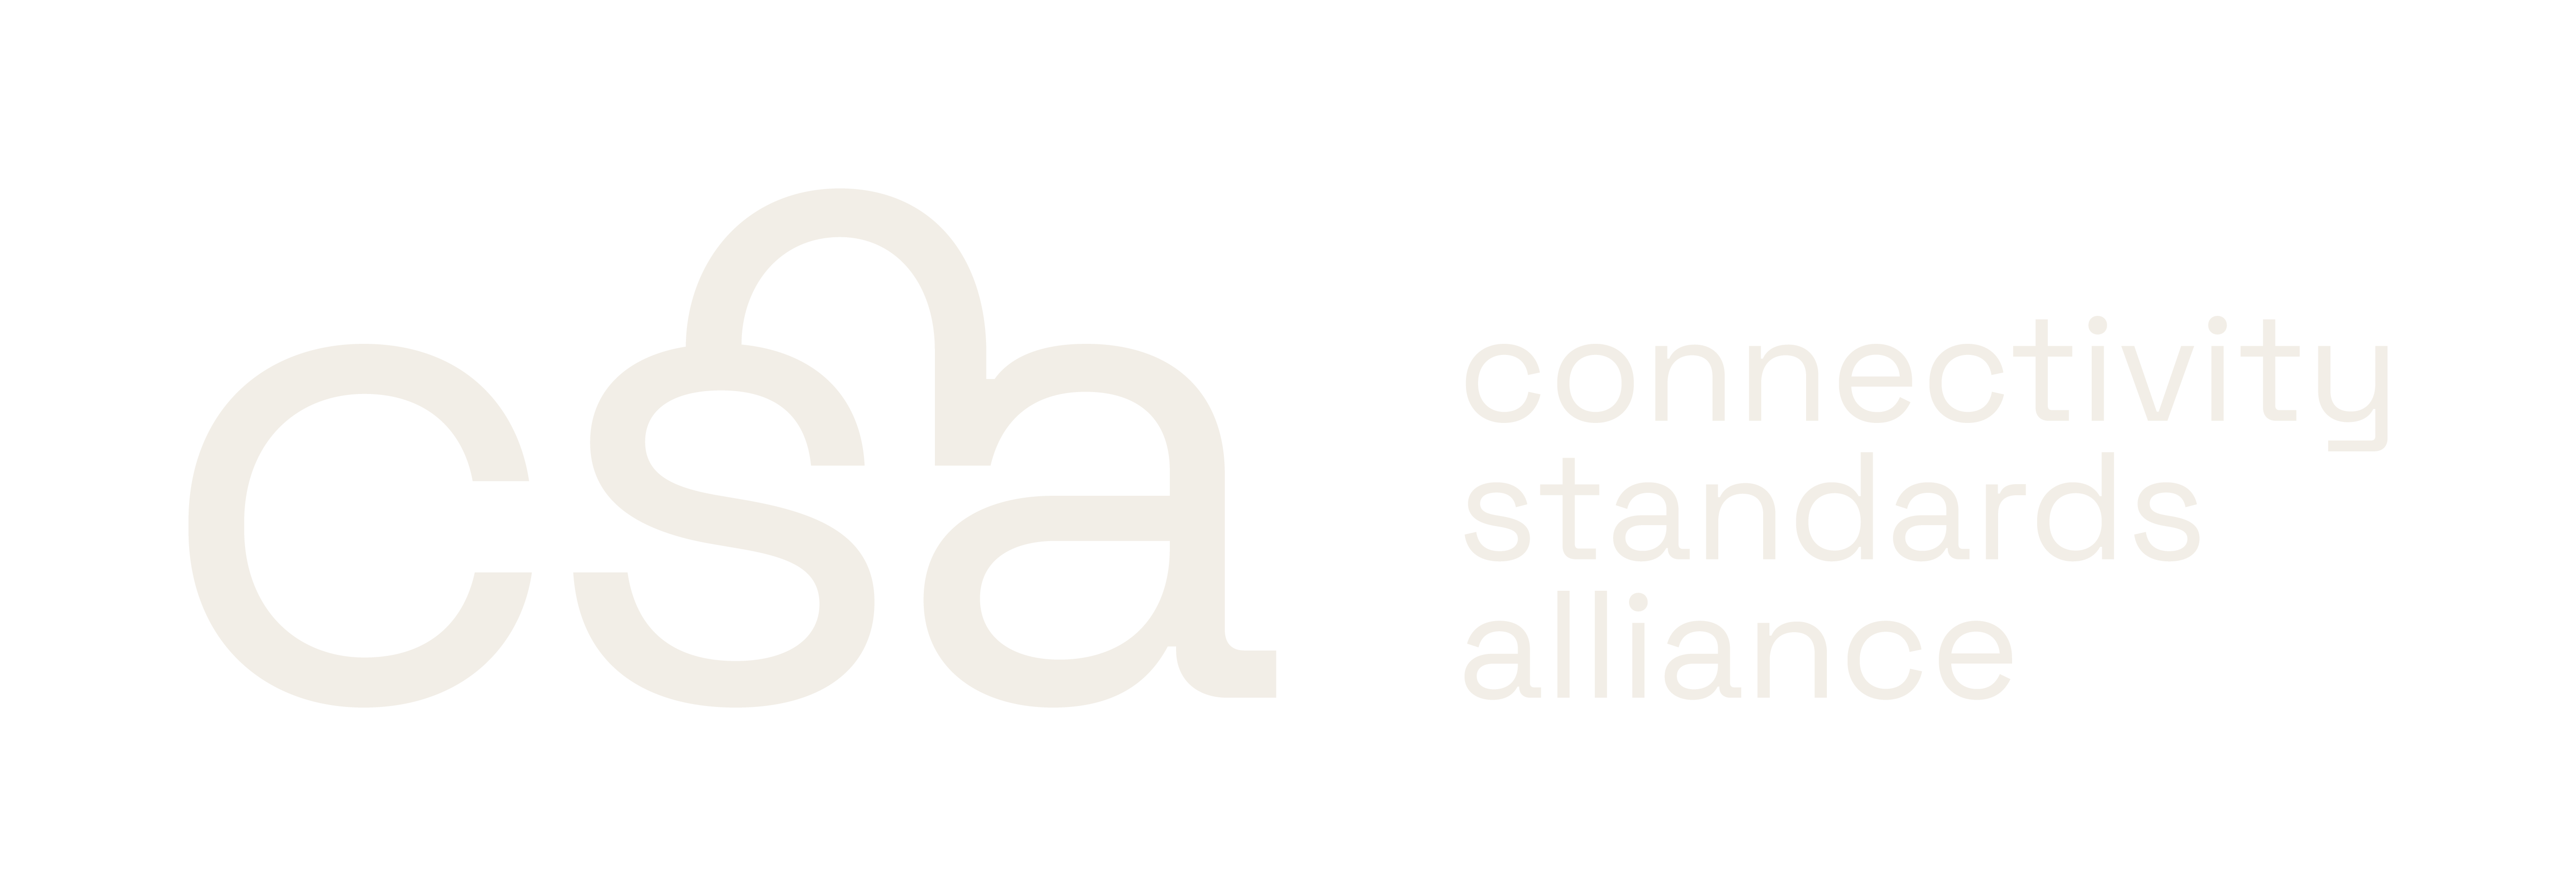 Connectivity Standards Alliance